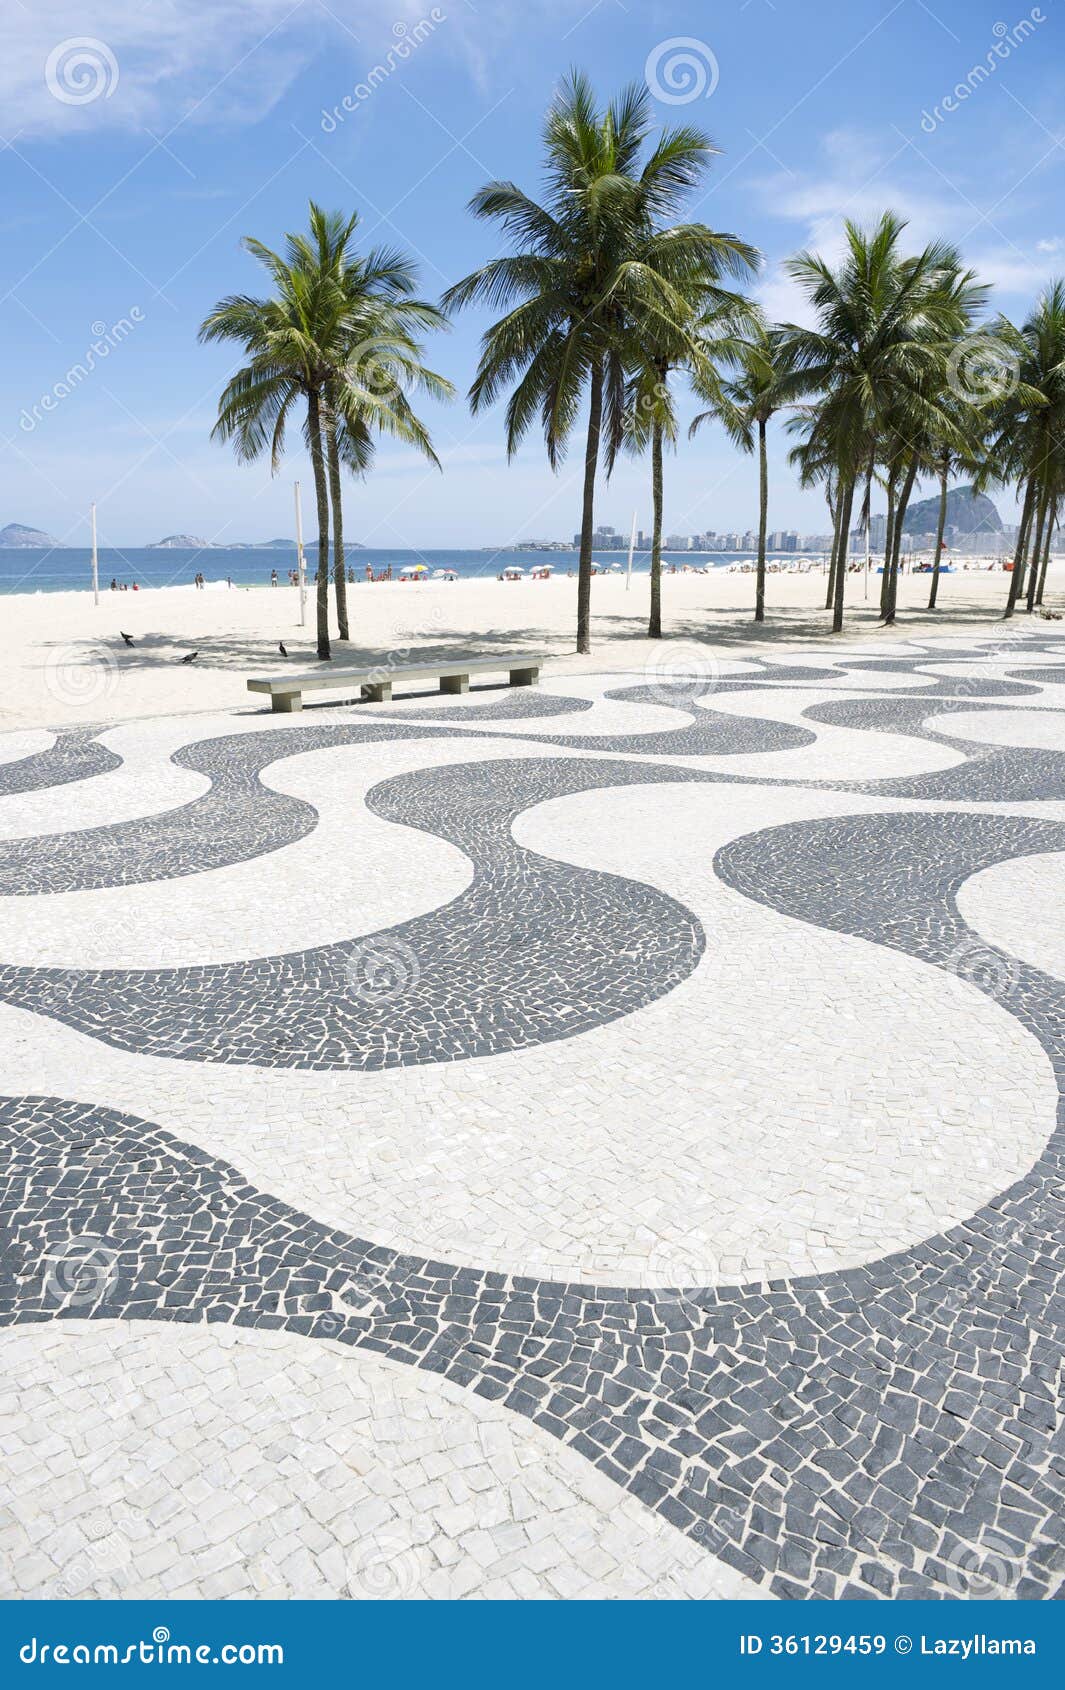 copacabana beach boardwalk rio de janeiro brazil